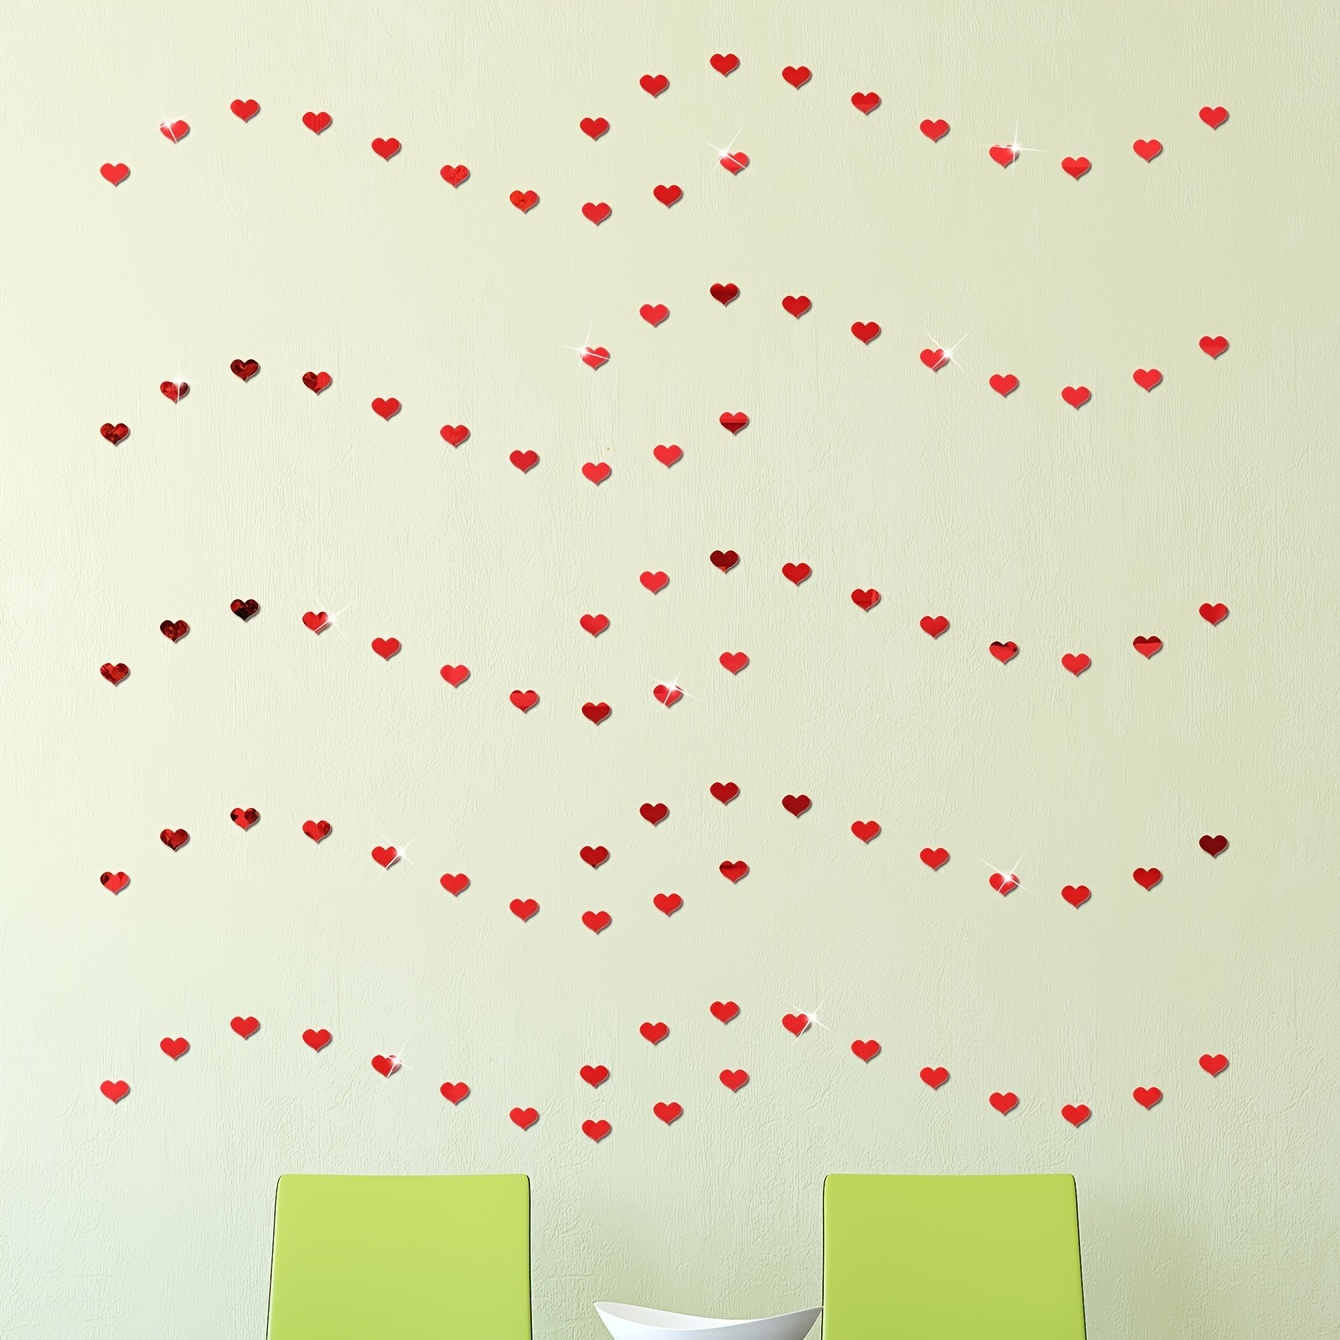 Wall Stickers Heart Shape Mirror Wall Sticker 3D Art Wall Decal Removable  Mirror Wall Sticker For Home Decoration